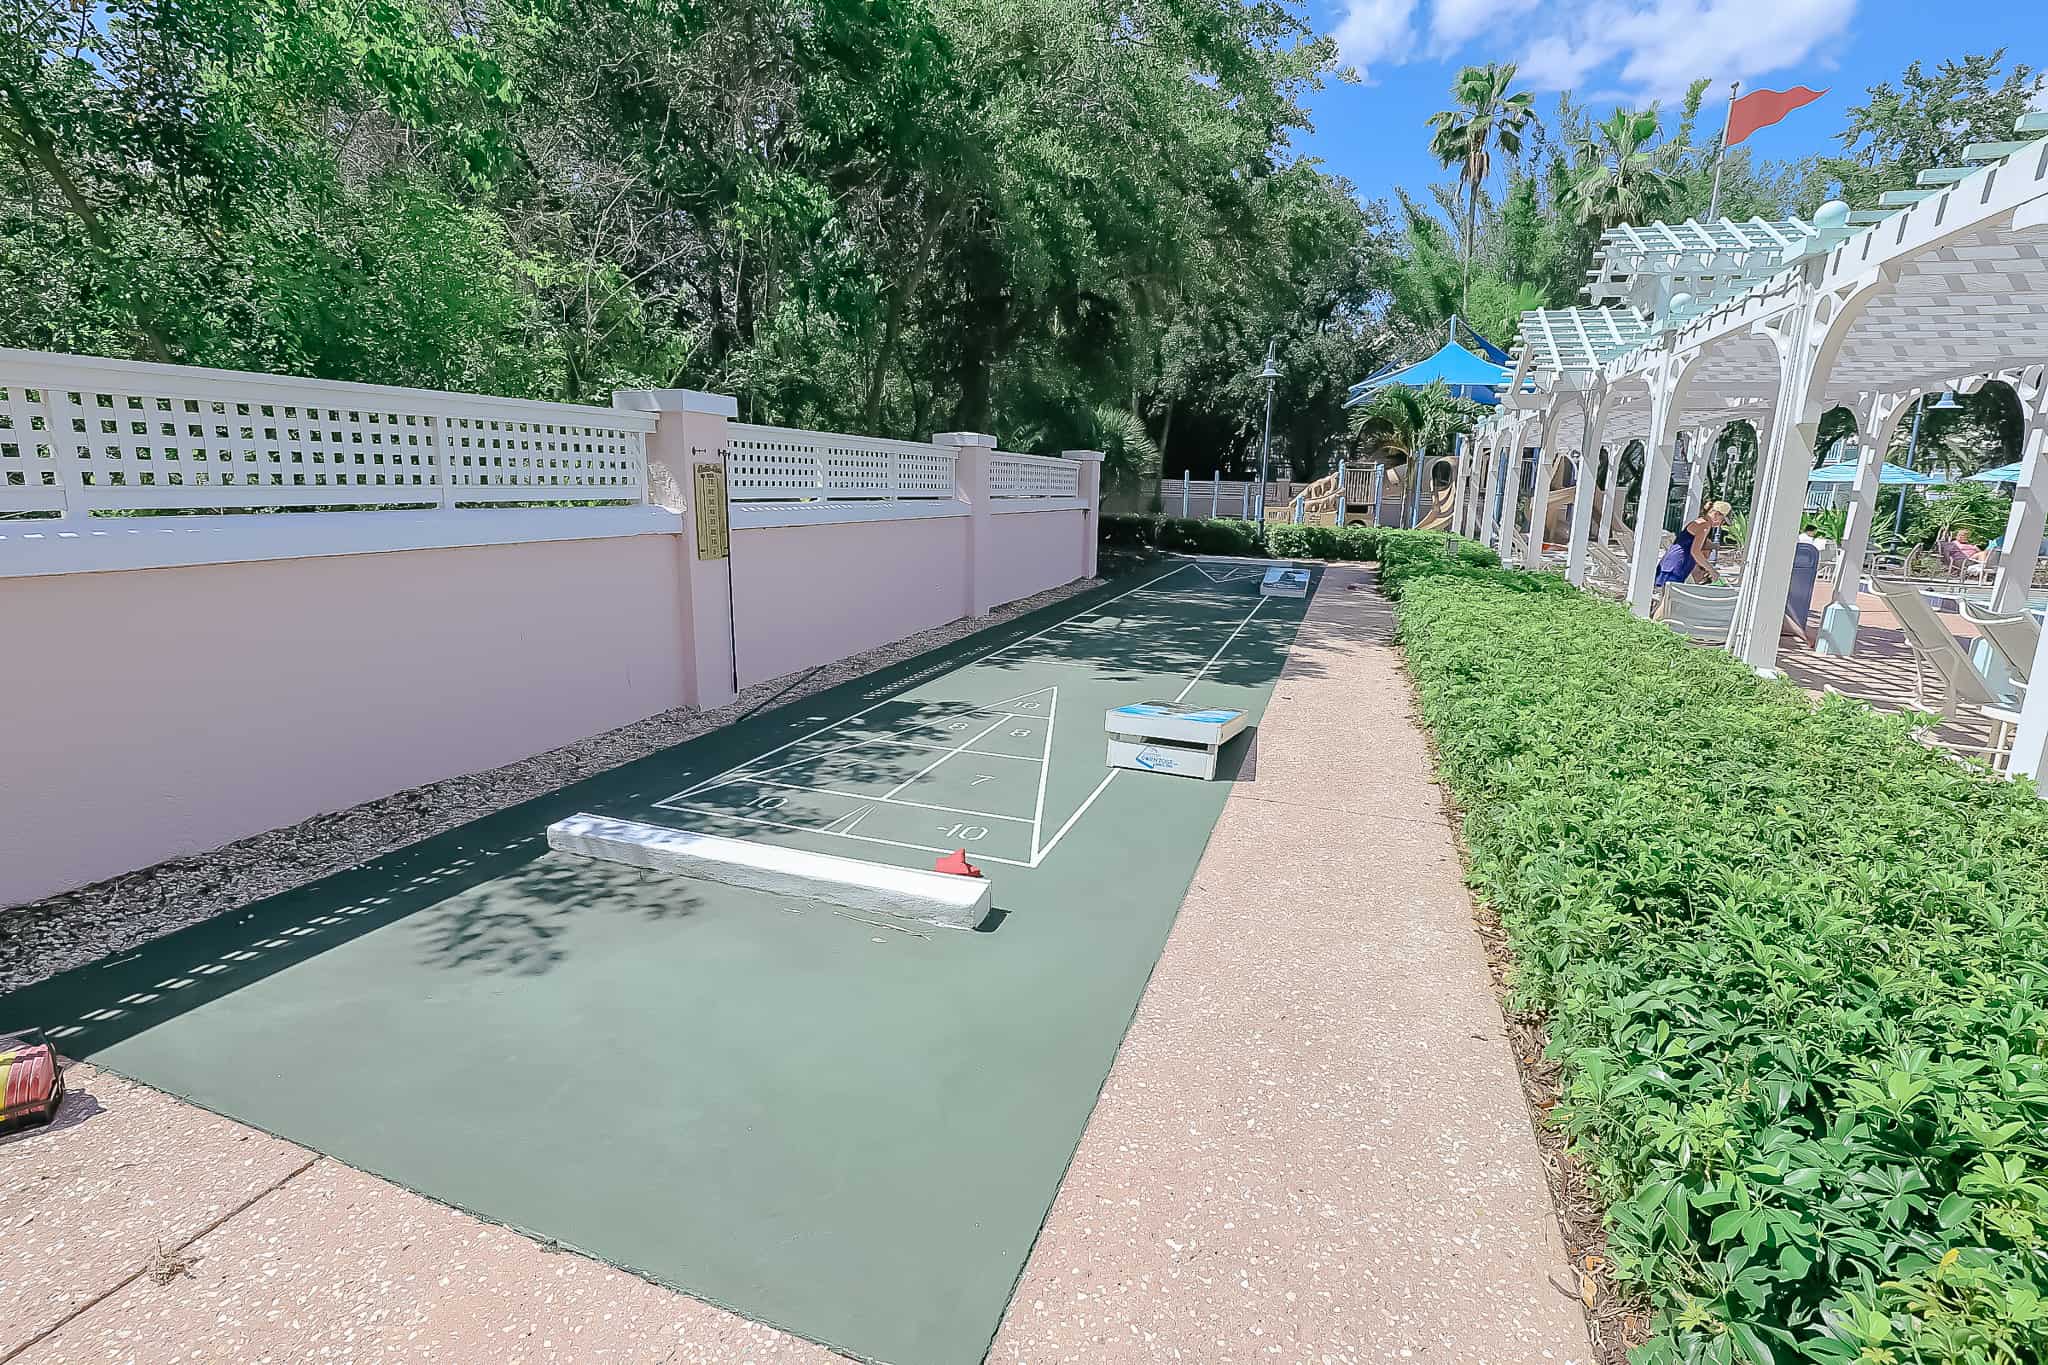 shuffle board pool at Disney's Old Key West 